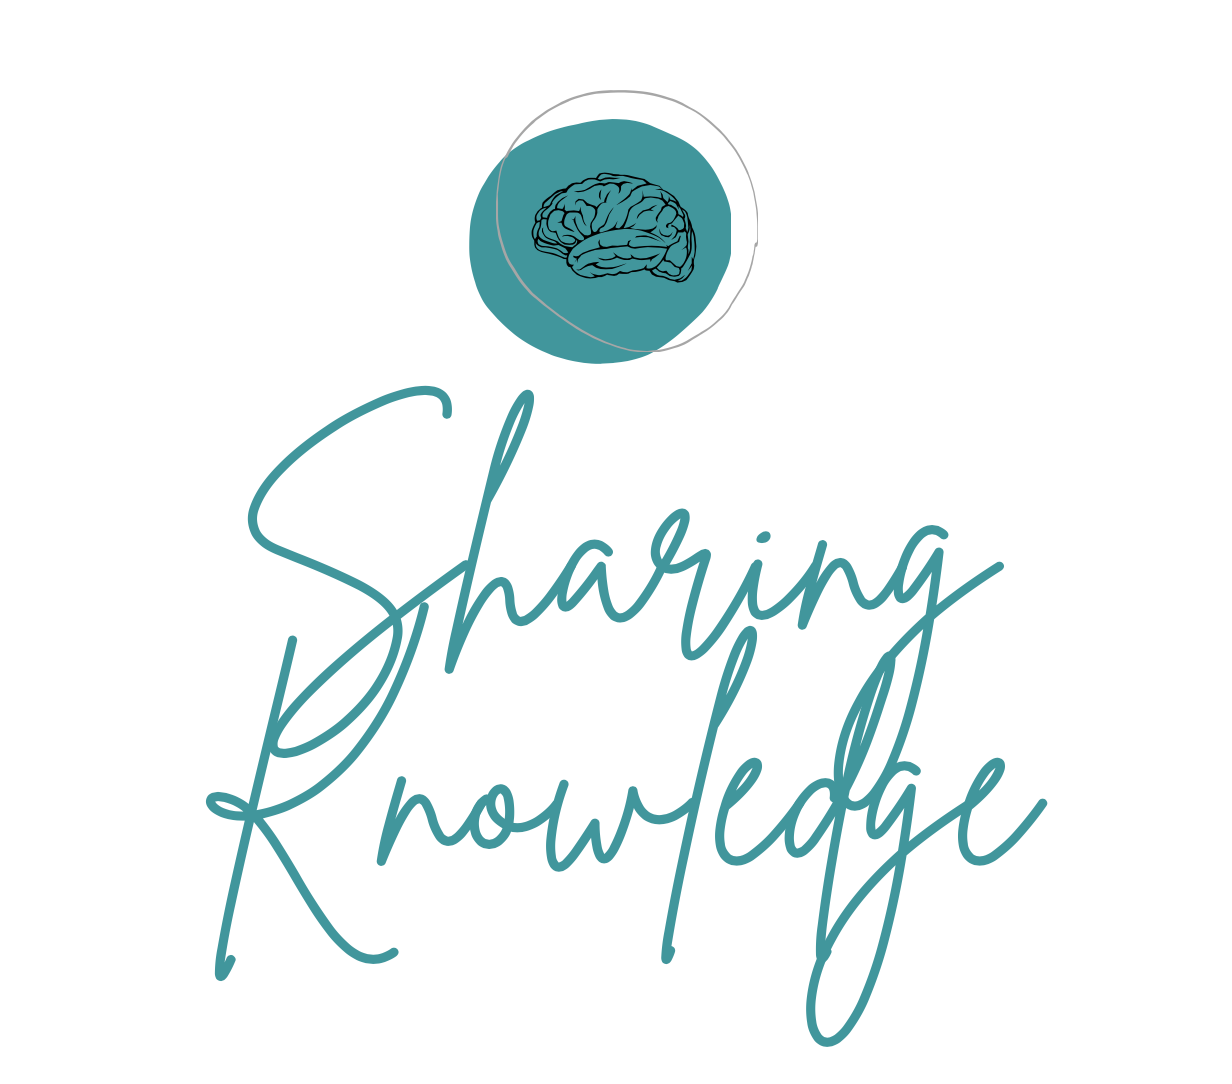 sharing knowledge